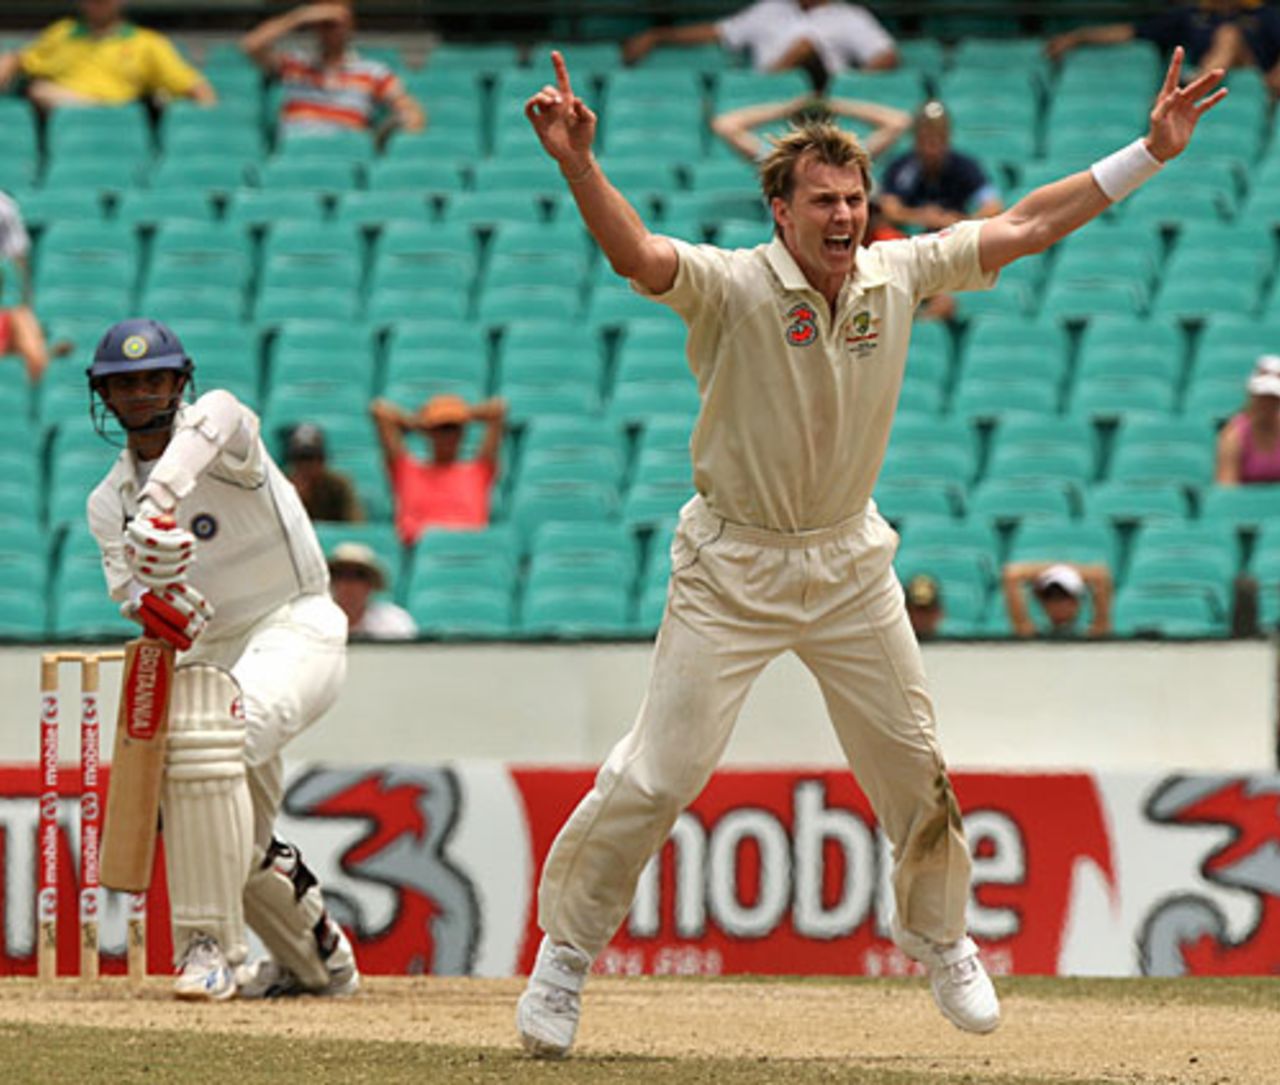 Brett Lee appeals against Rahul Dravid, Australia v India, 2nd Test, Sydney, 5th day, January 6, 2008